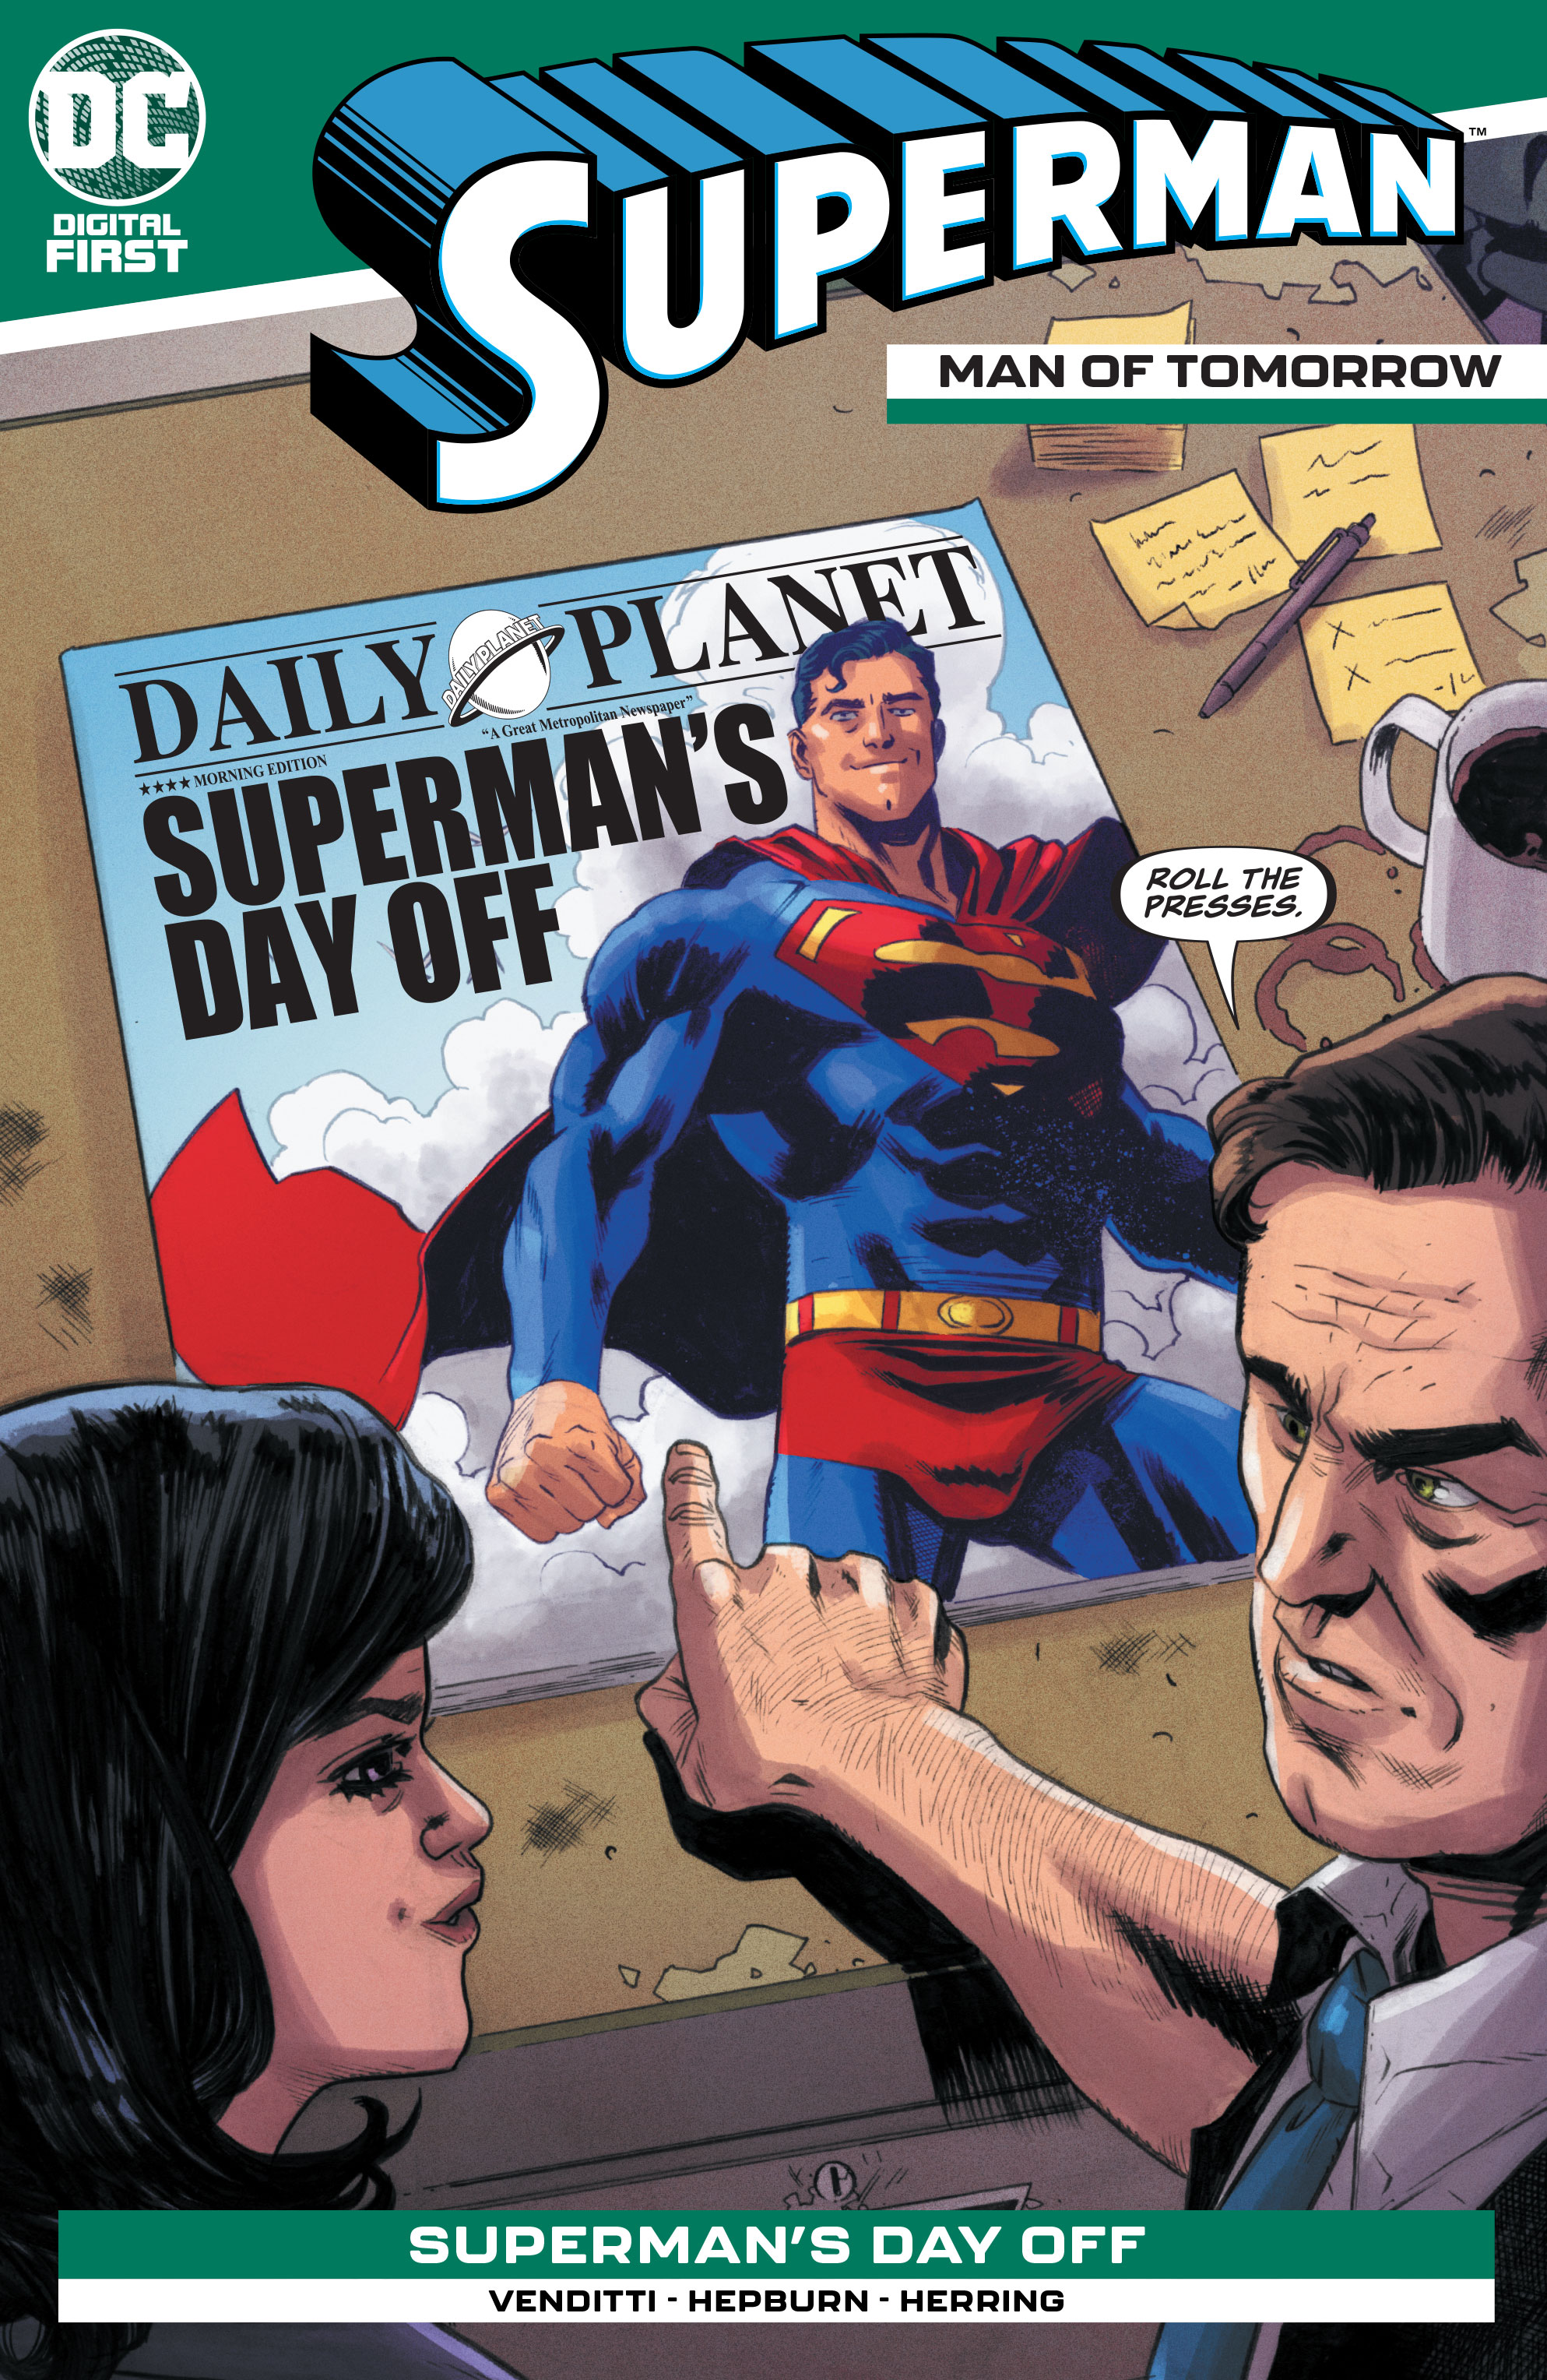 SUPERMAN-THE-MAN-OF-TOMORROW-Cv12